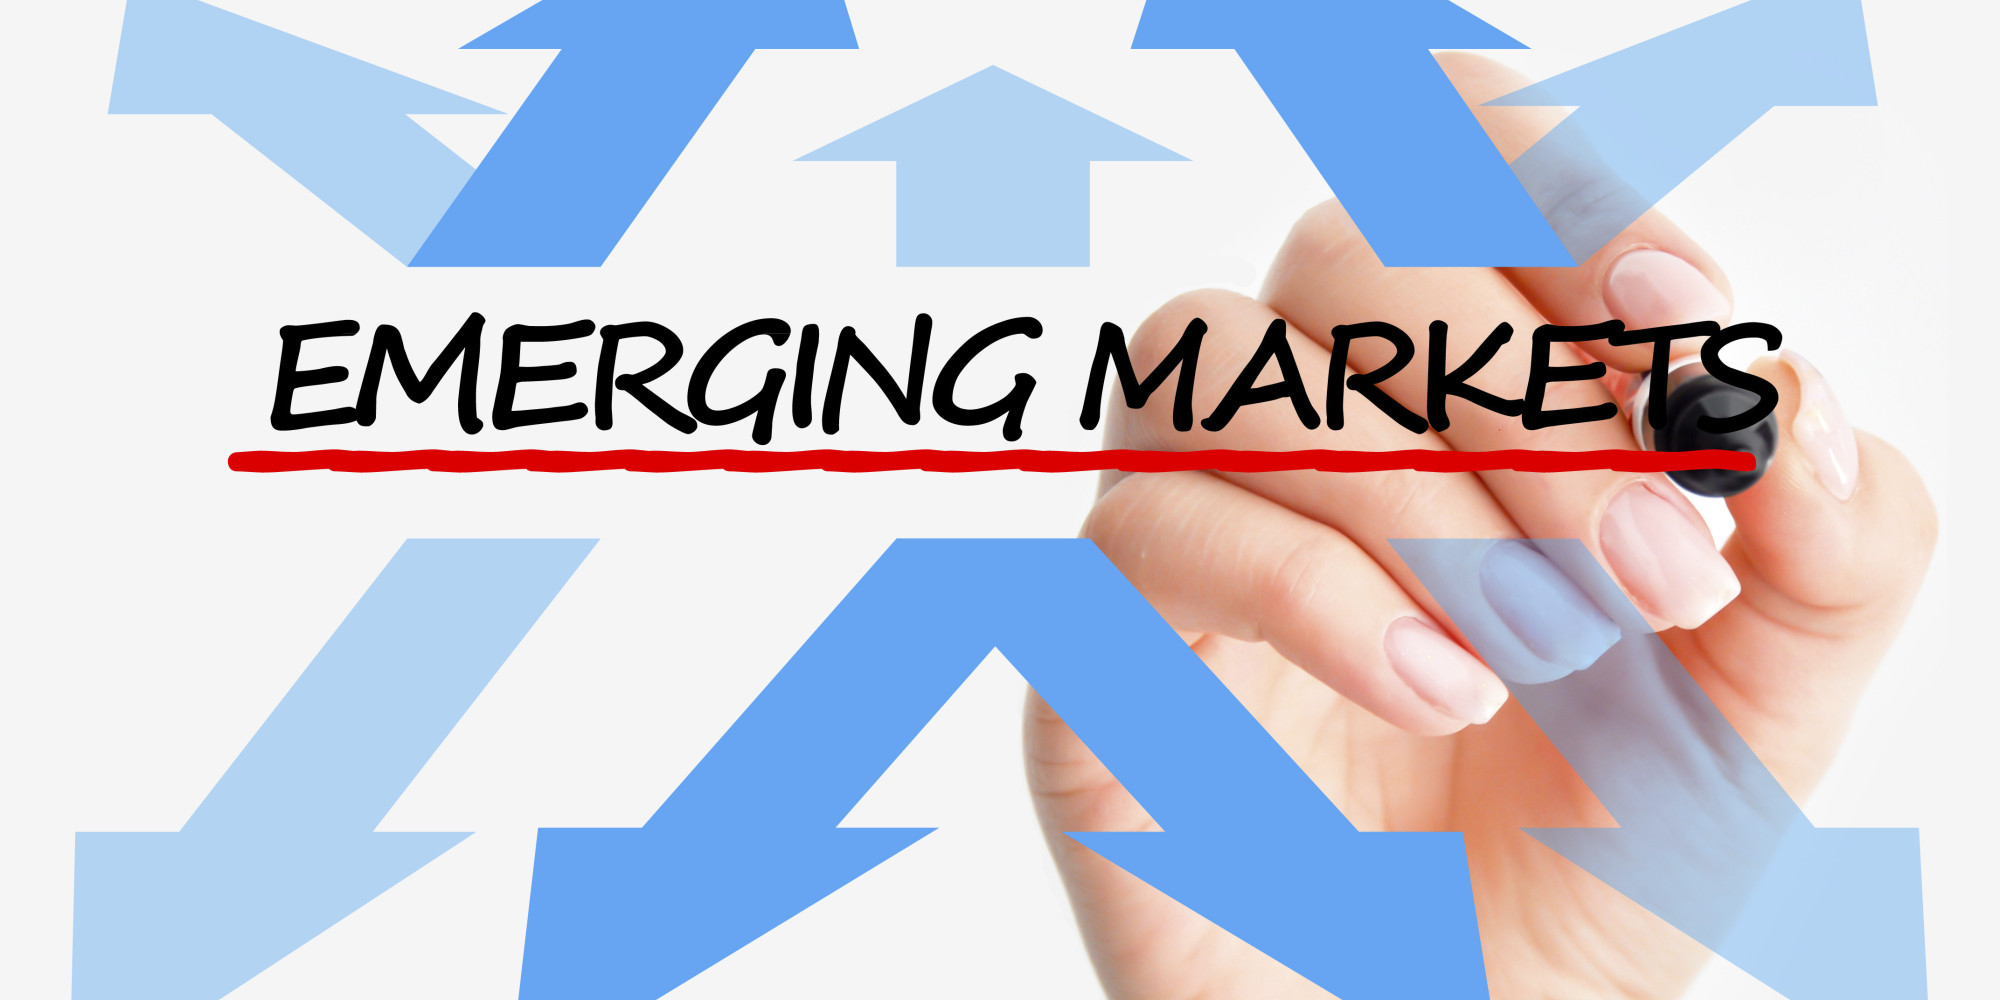 Apa Itu Emerging Markets? Berikut Pejelasannya Dibawah ini!